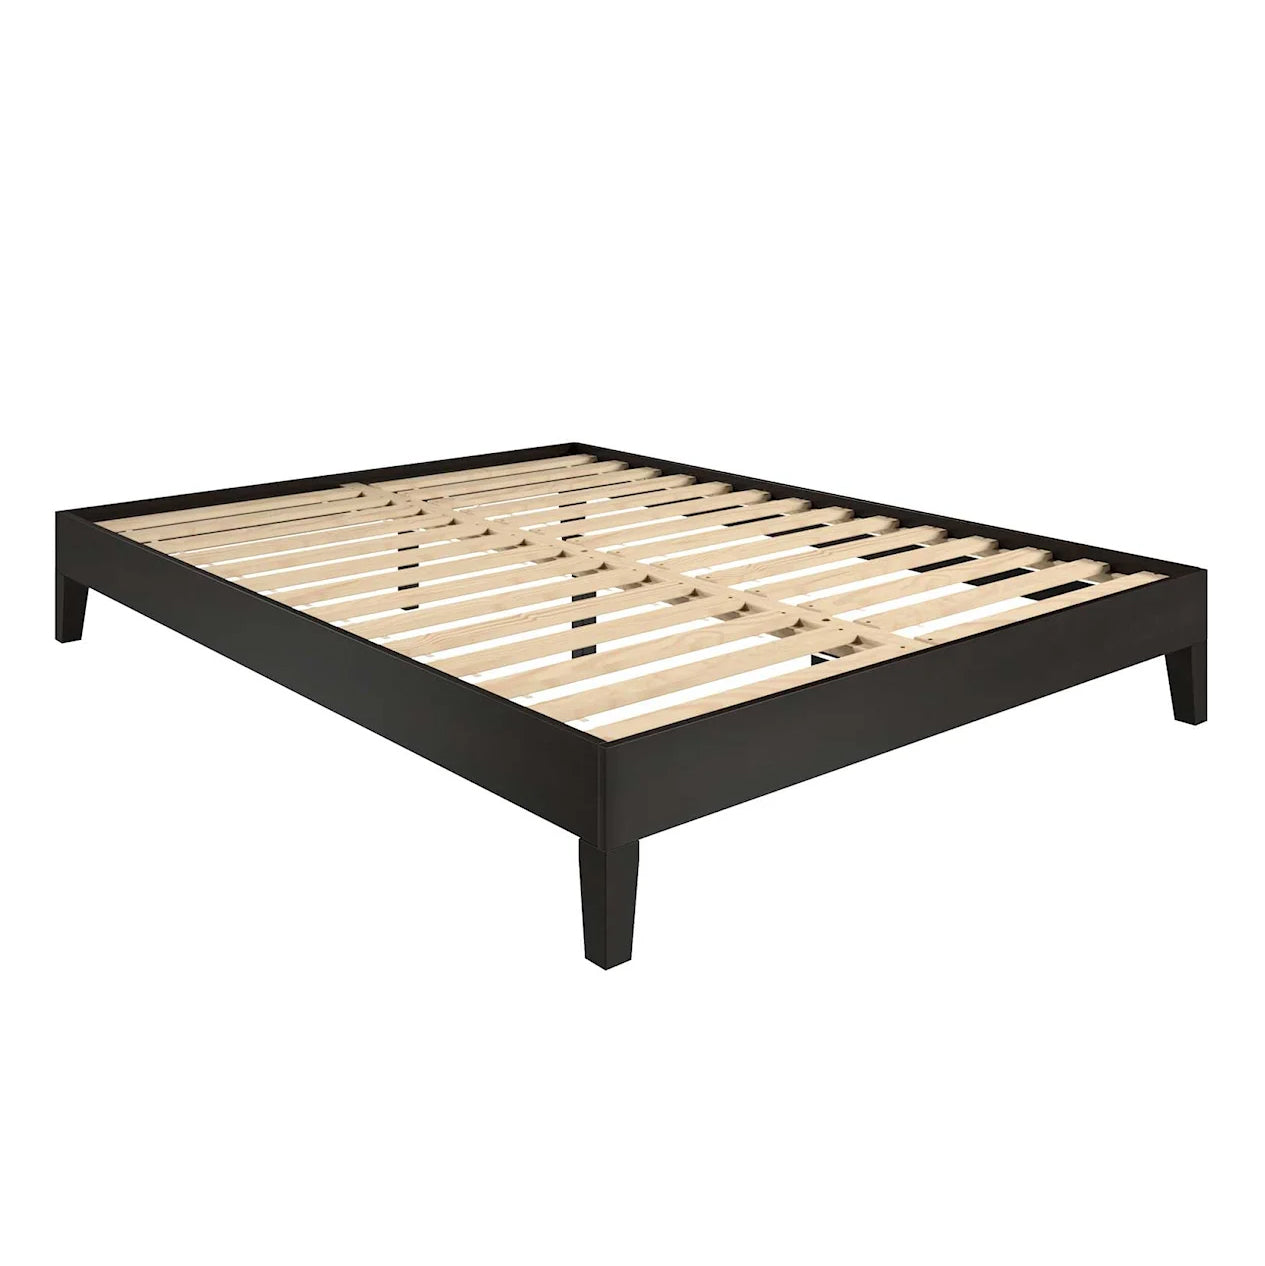 Bellemave® Queen Size Contemporary Platform Bed